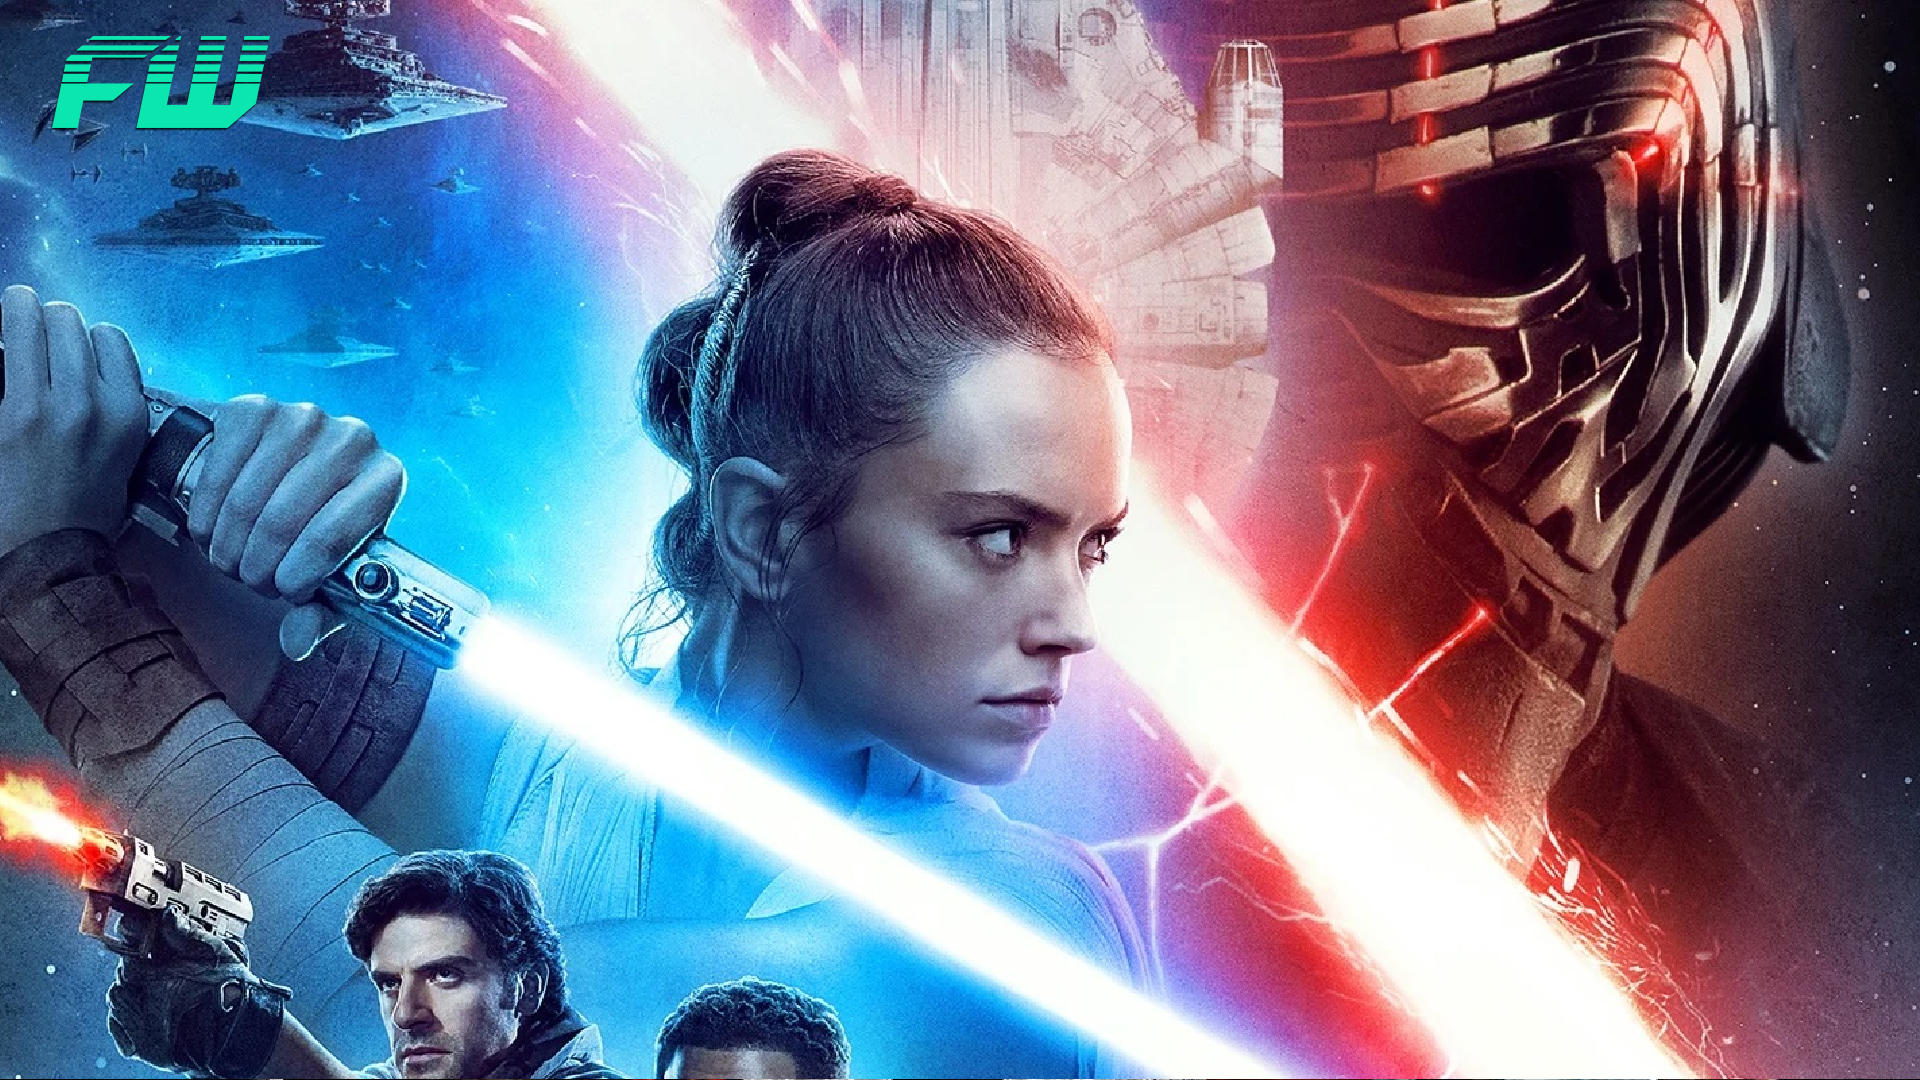 Star Wars Skywalker Saga Trailer Attempts To Unite All 9 Films